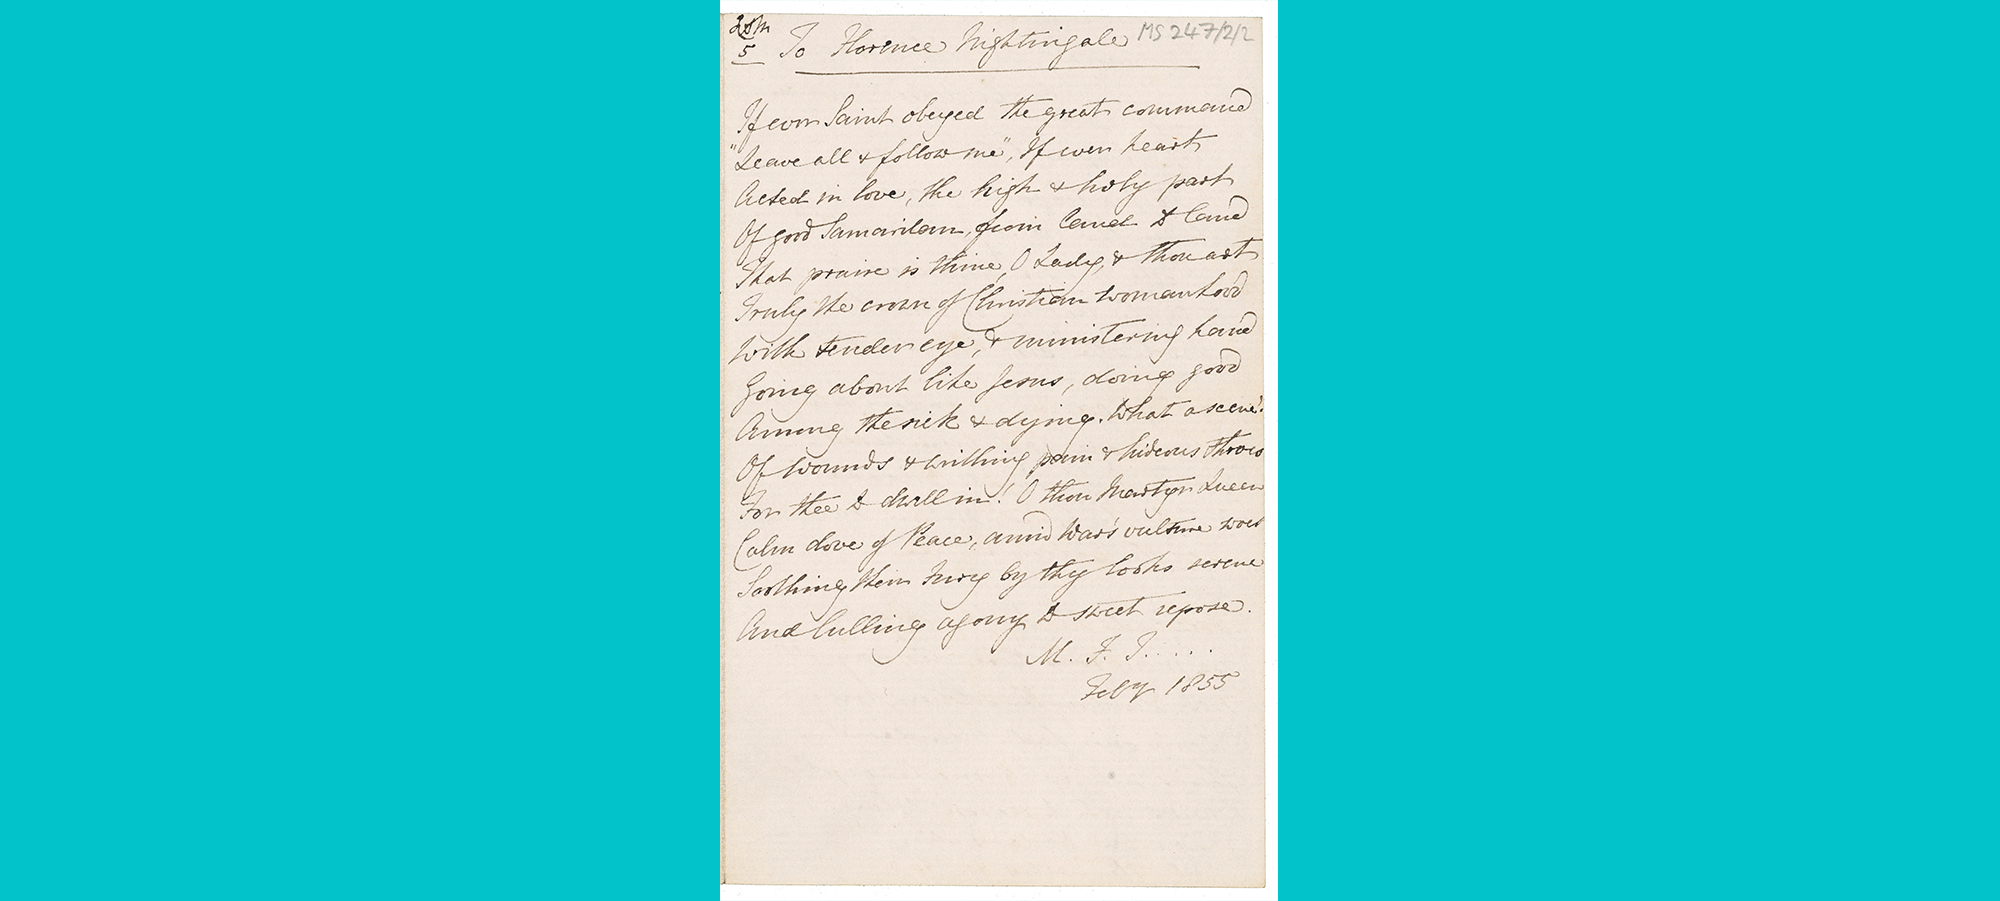 scan of handwritten poem to Florence Nightingale 